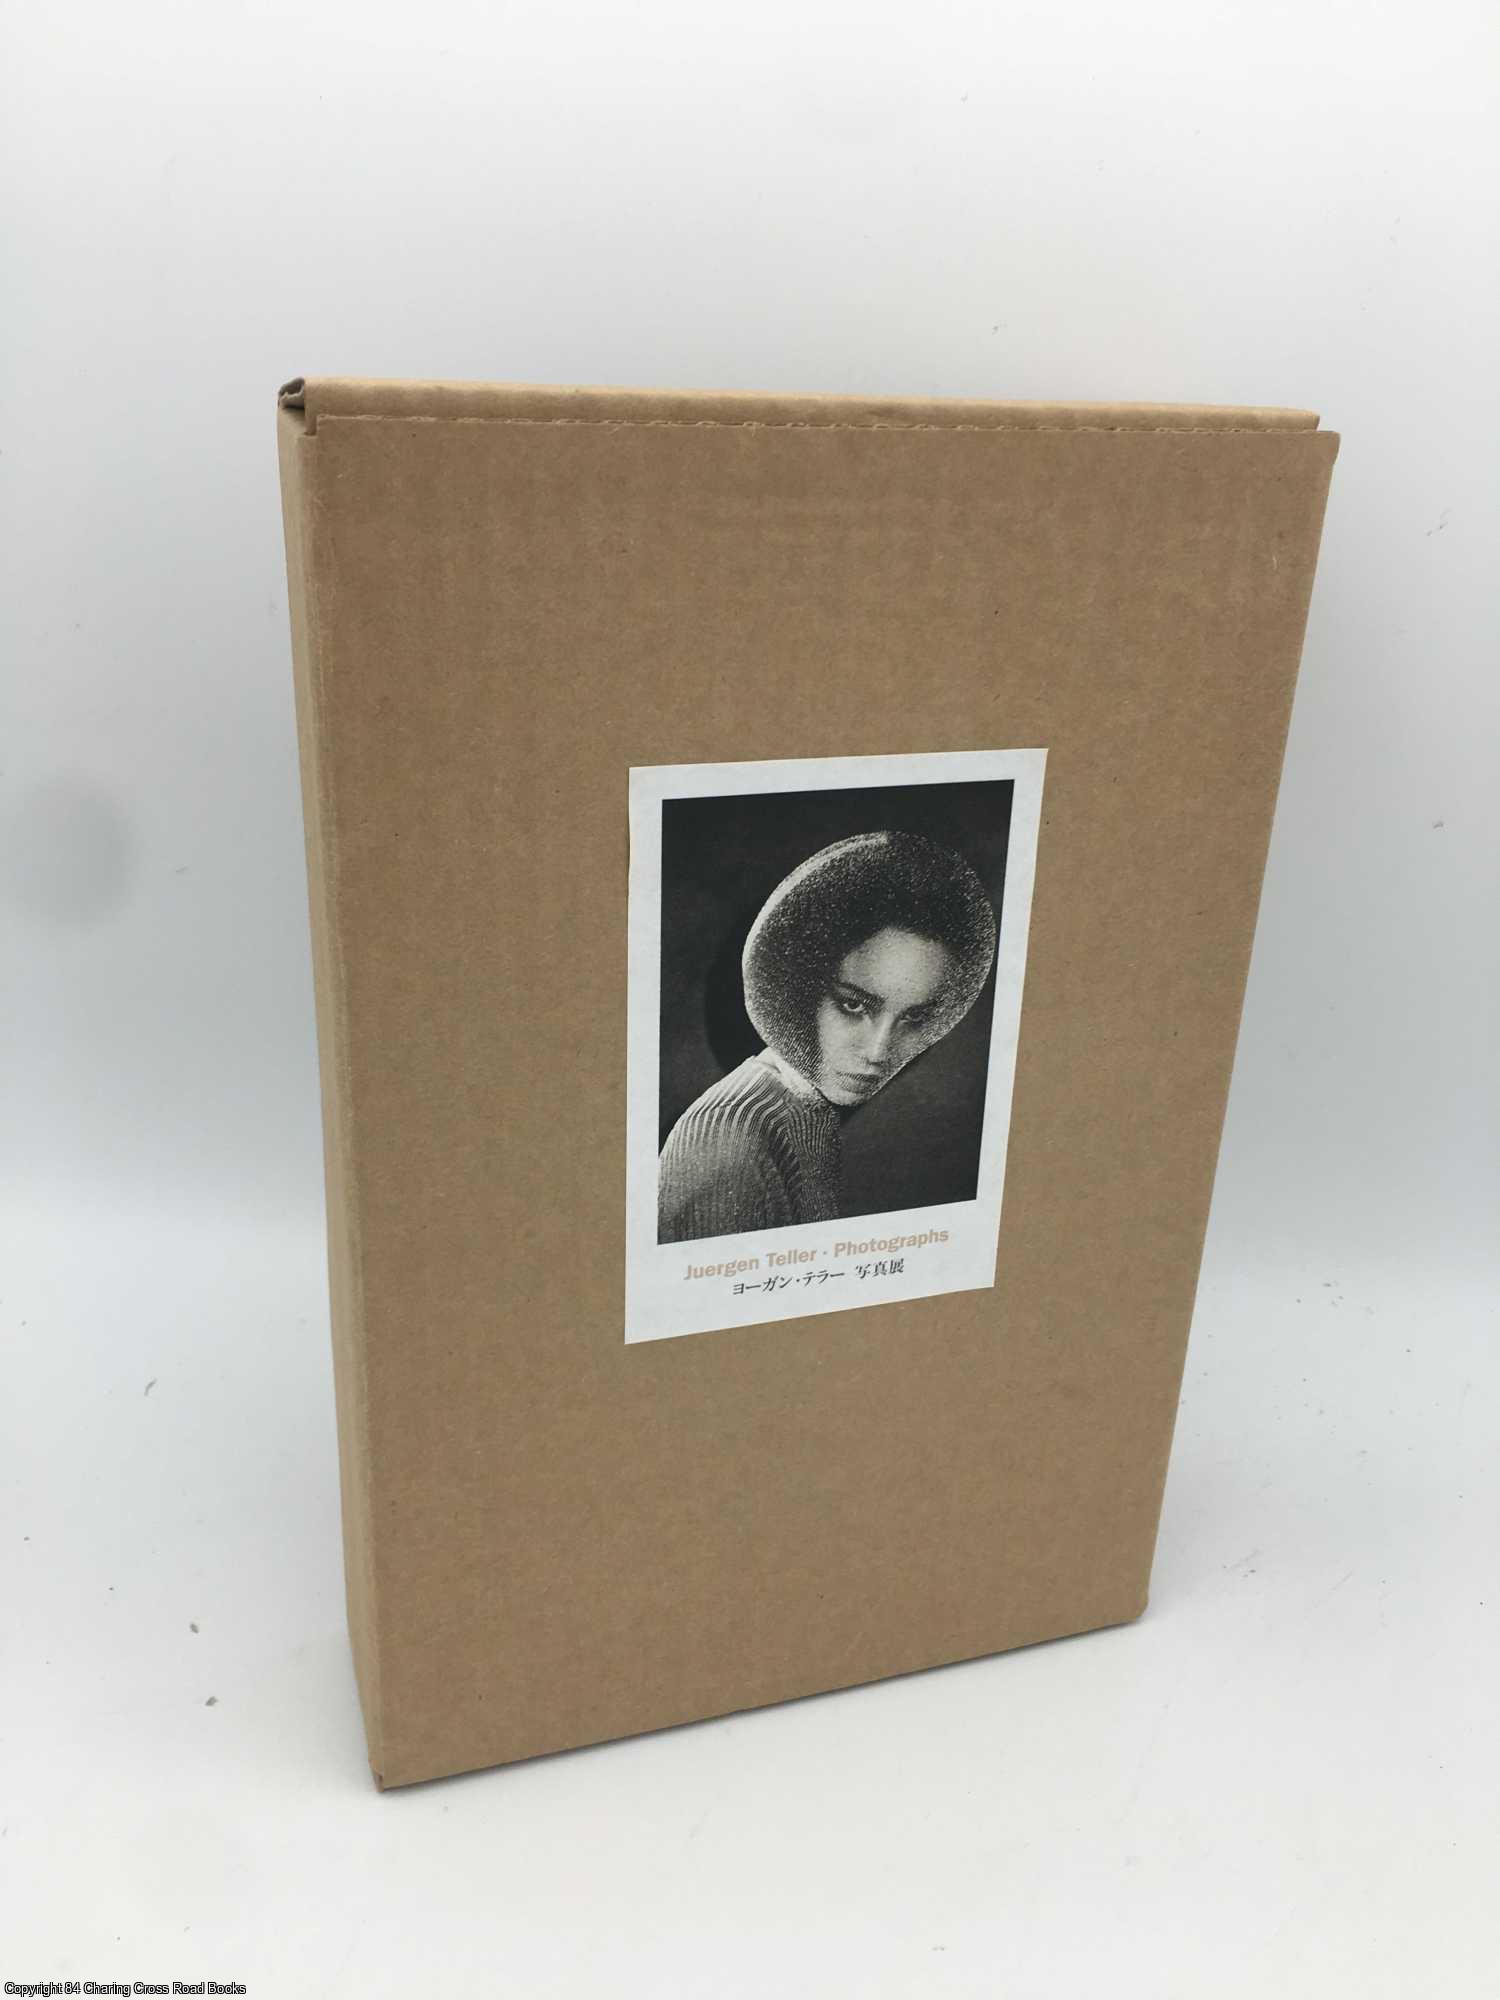 Juergen Teller: Photographs Limited edition box by Jurgen Teller on 84  Charing Cross Rare Books